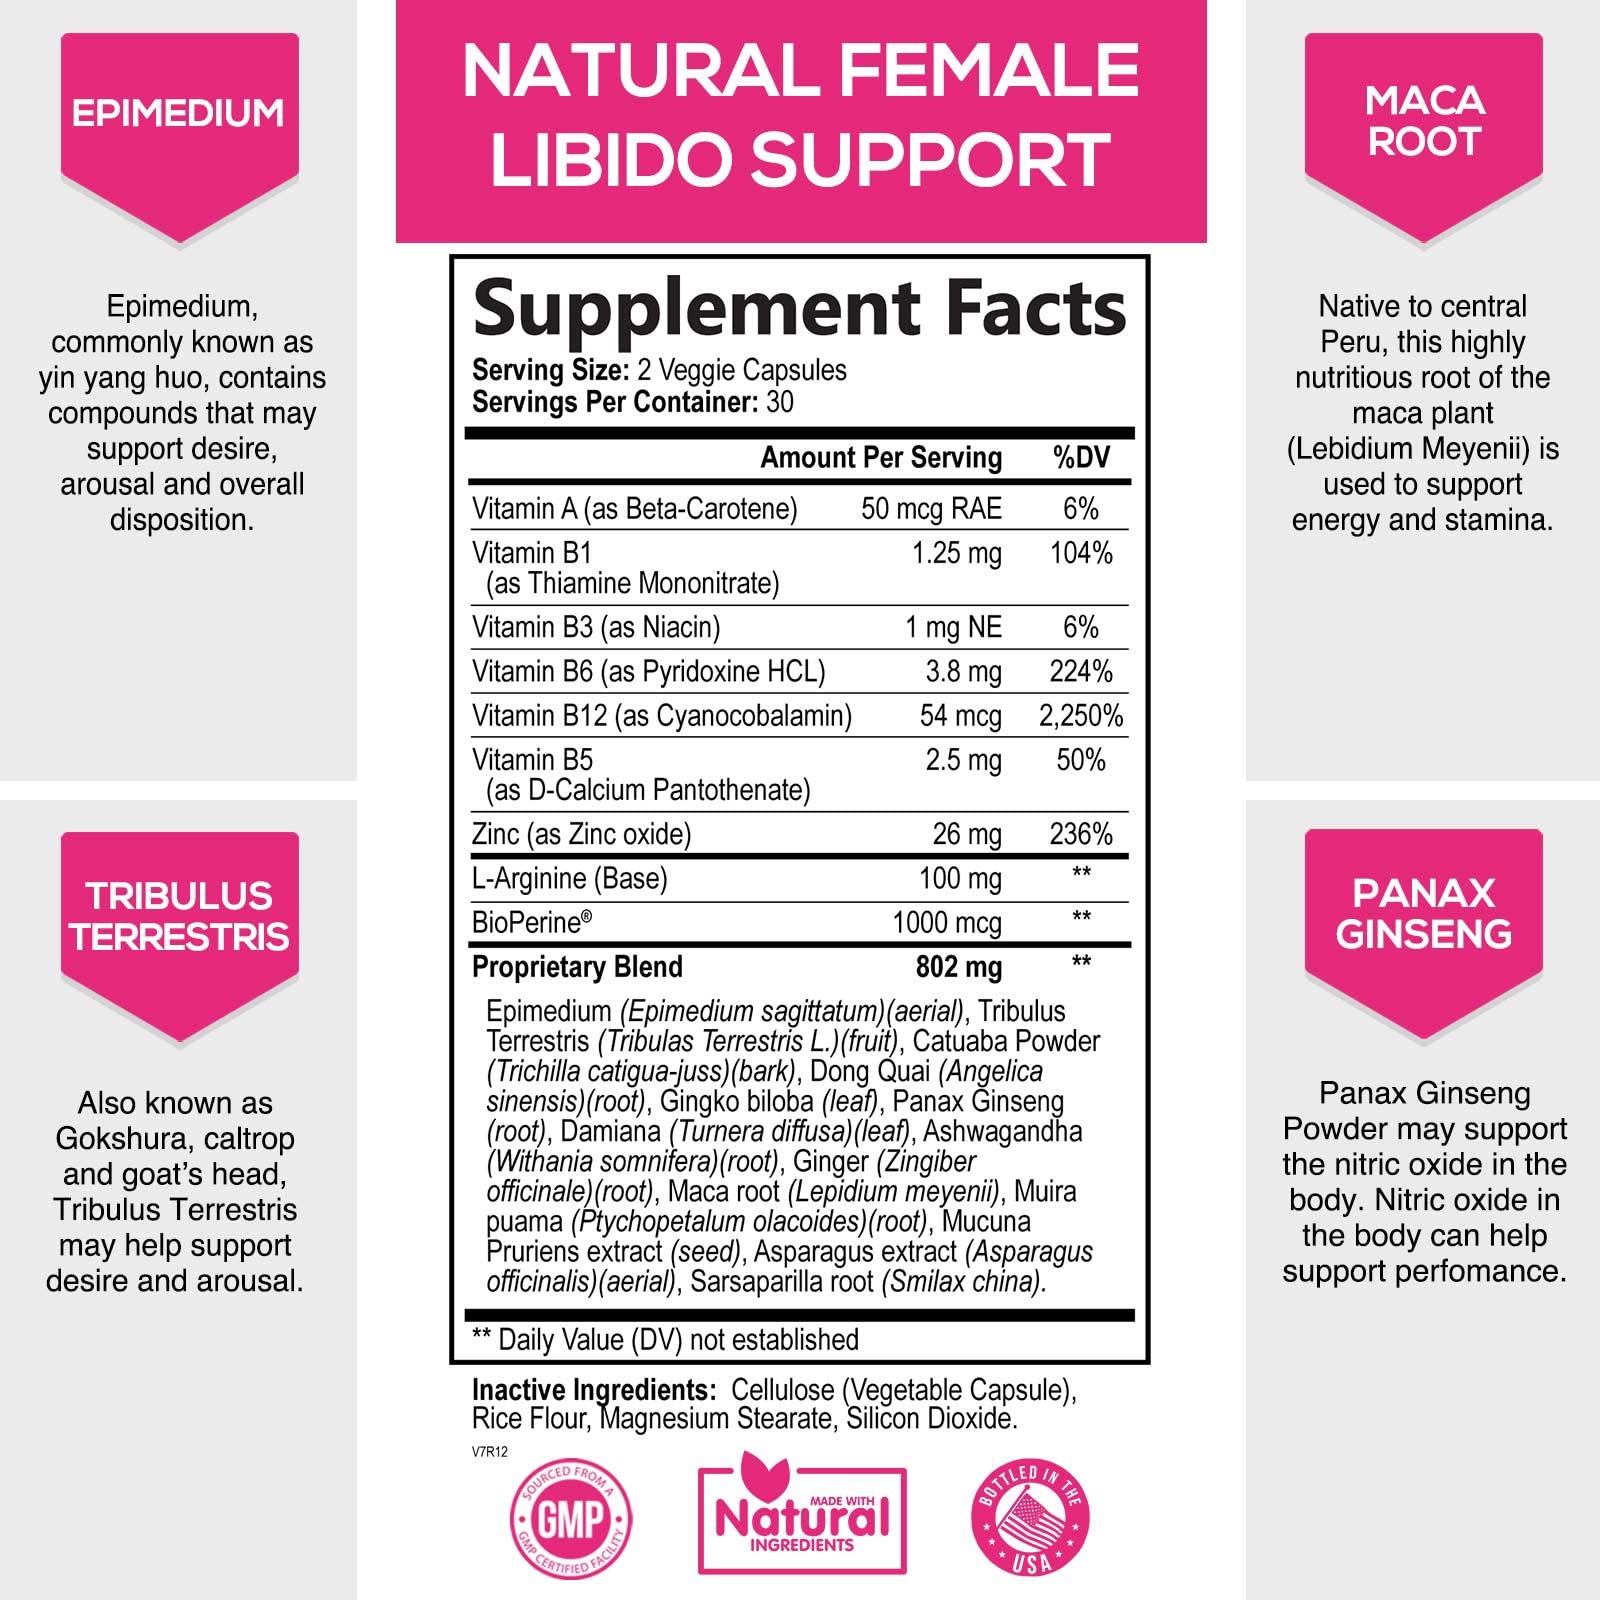 Libido Booster for Women - Female Libido Support Supplement - Women Vitamins Formula Supports Energy - Maca Root, Panax Ginseng, Tribulus Terrestris, Ashwagandha & More - 60 Veggie Capsules